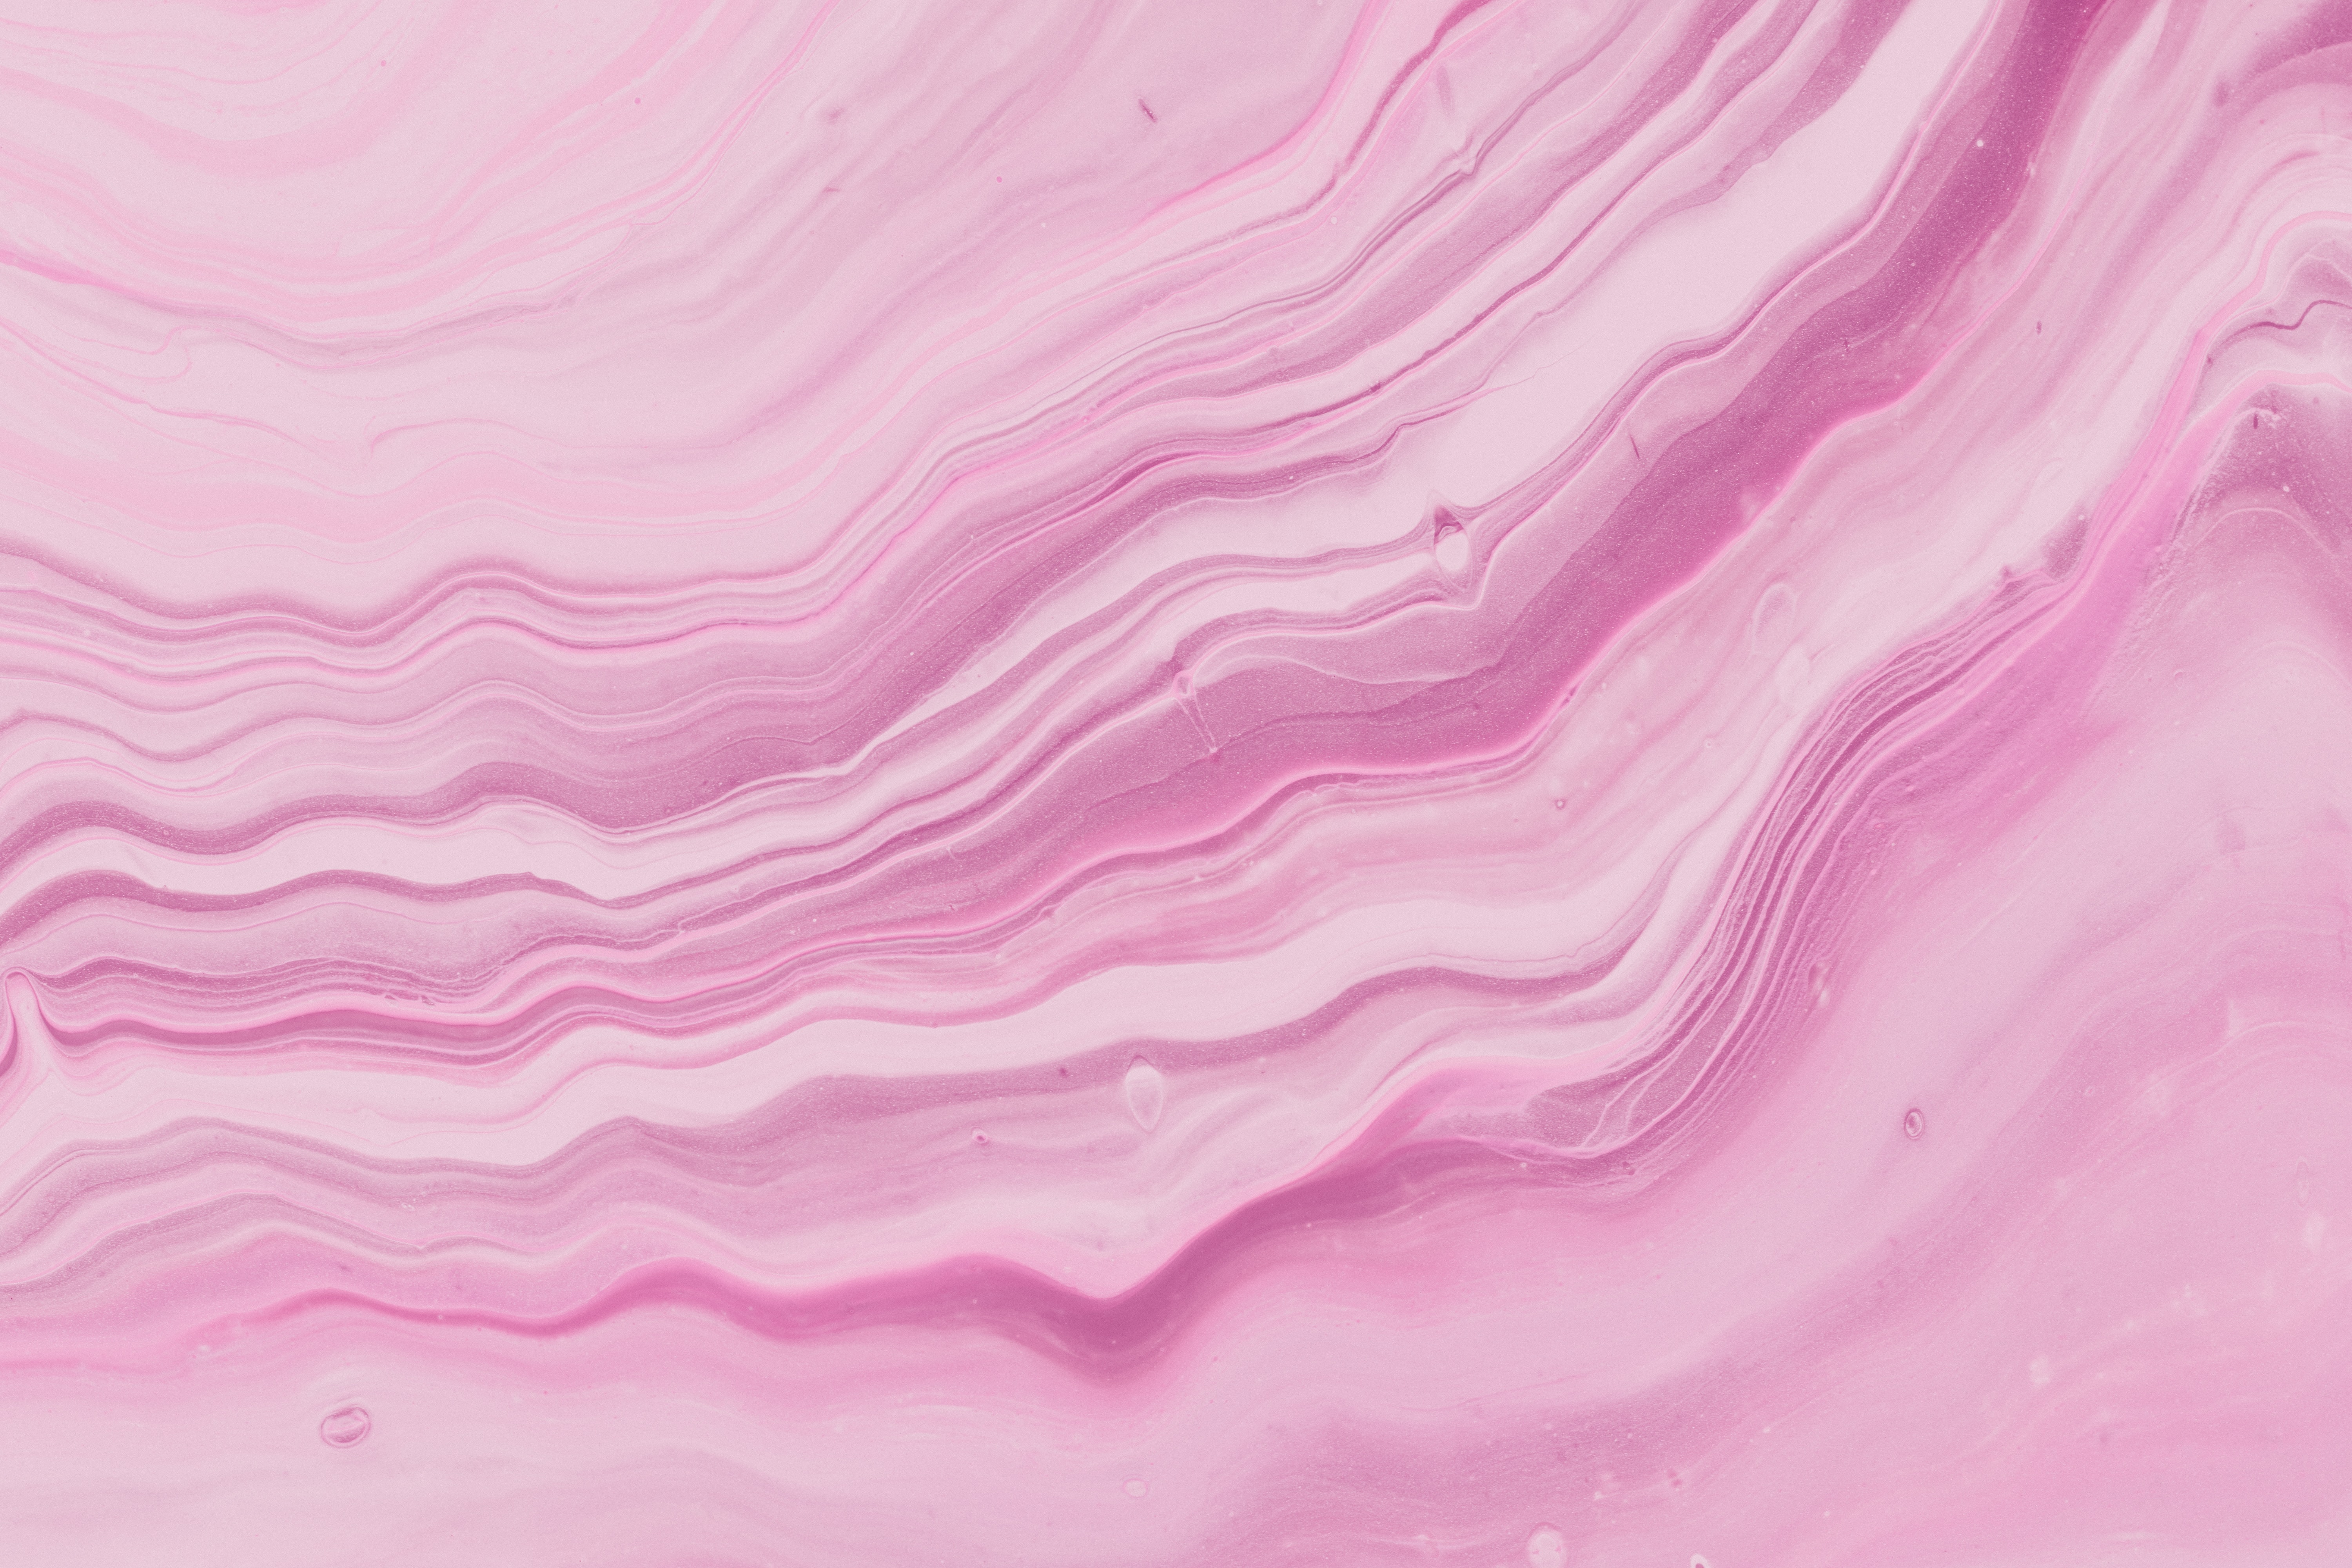 4k Pink Wallpaper Background Image